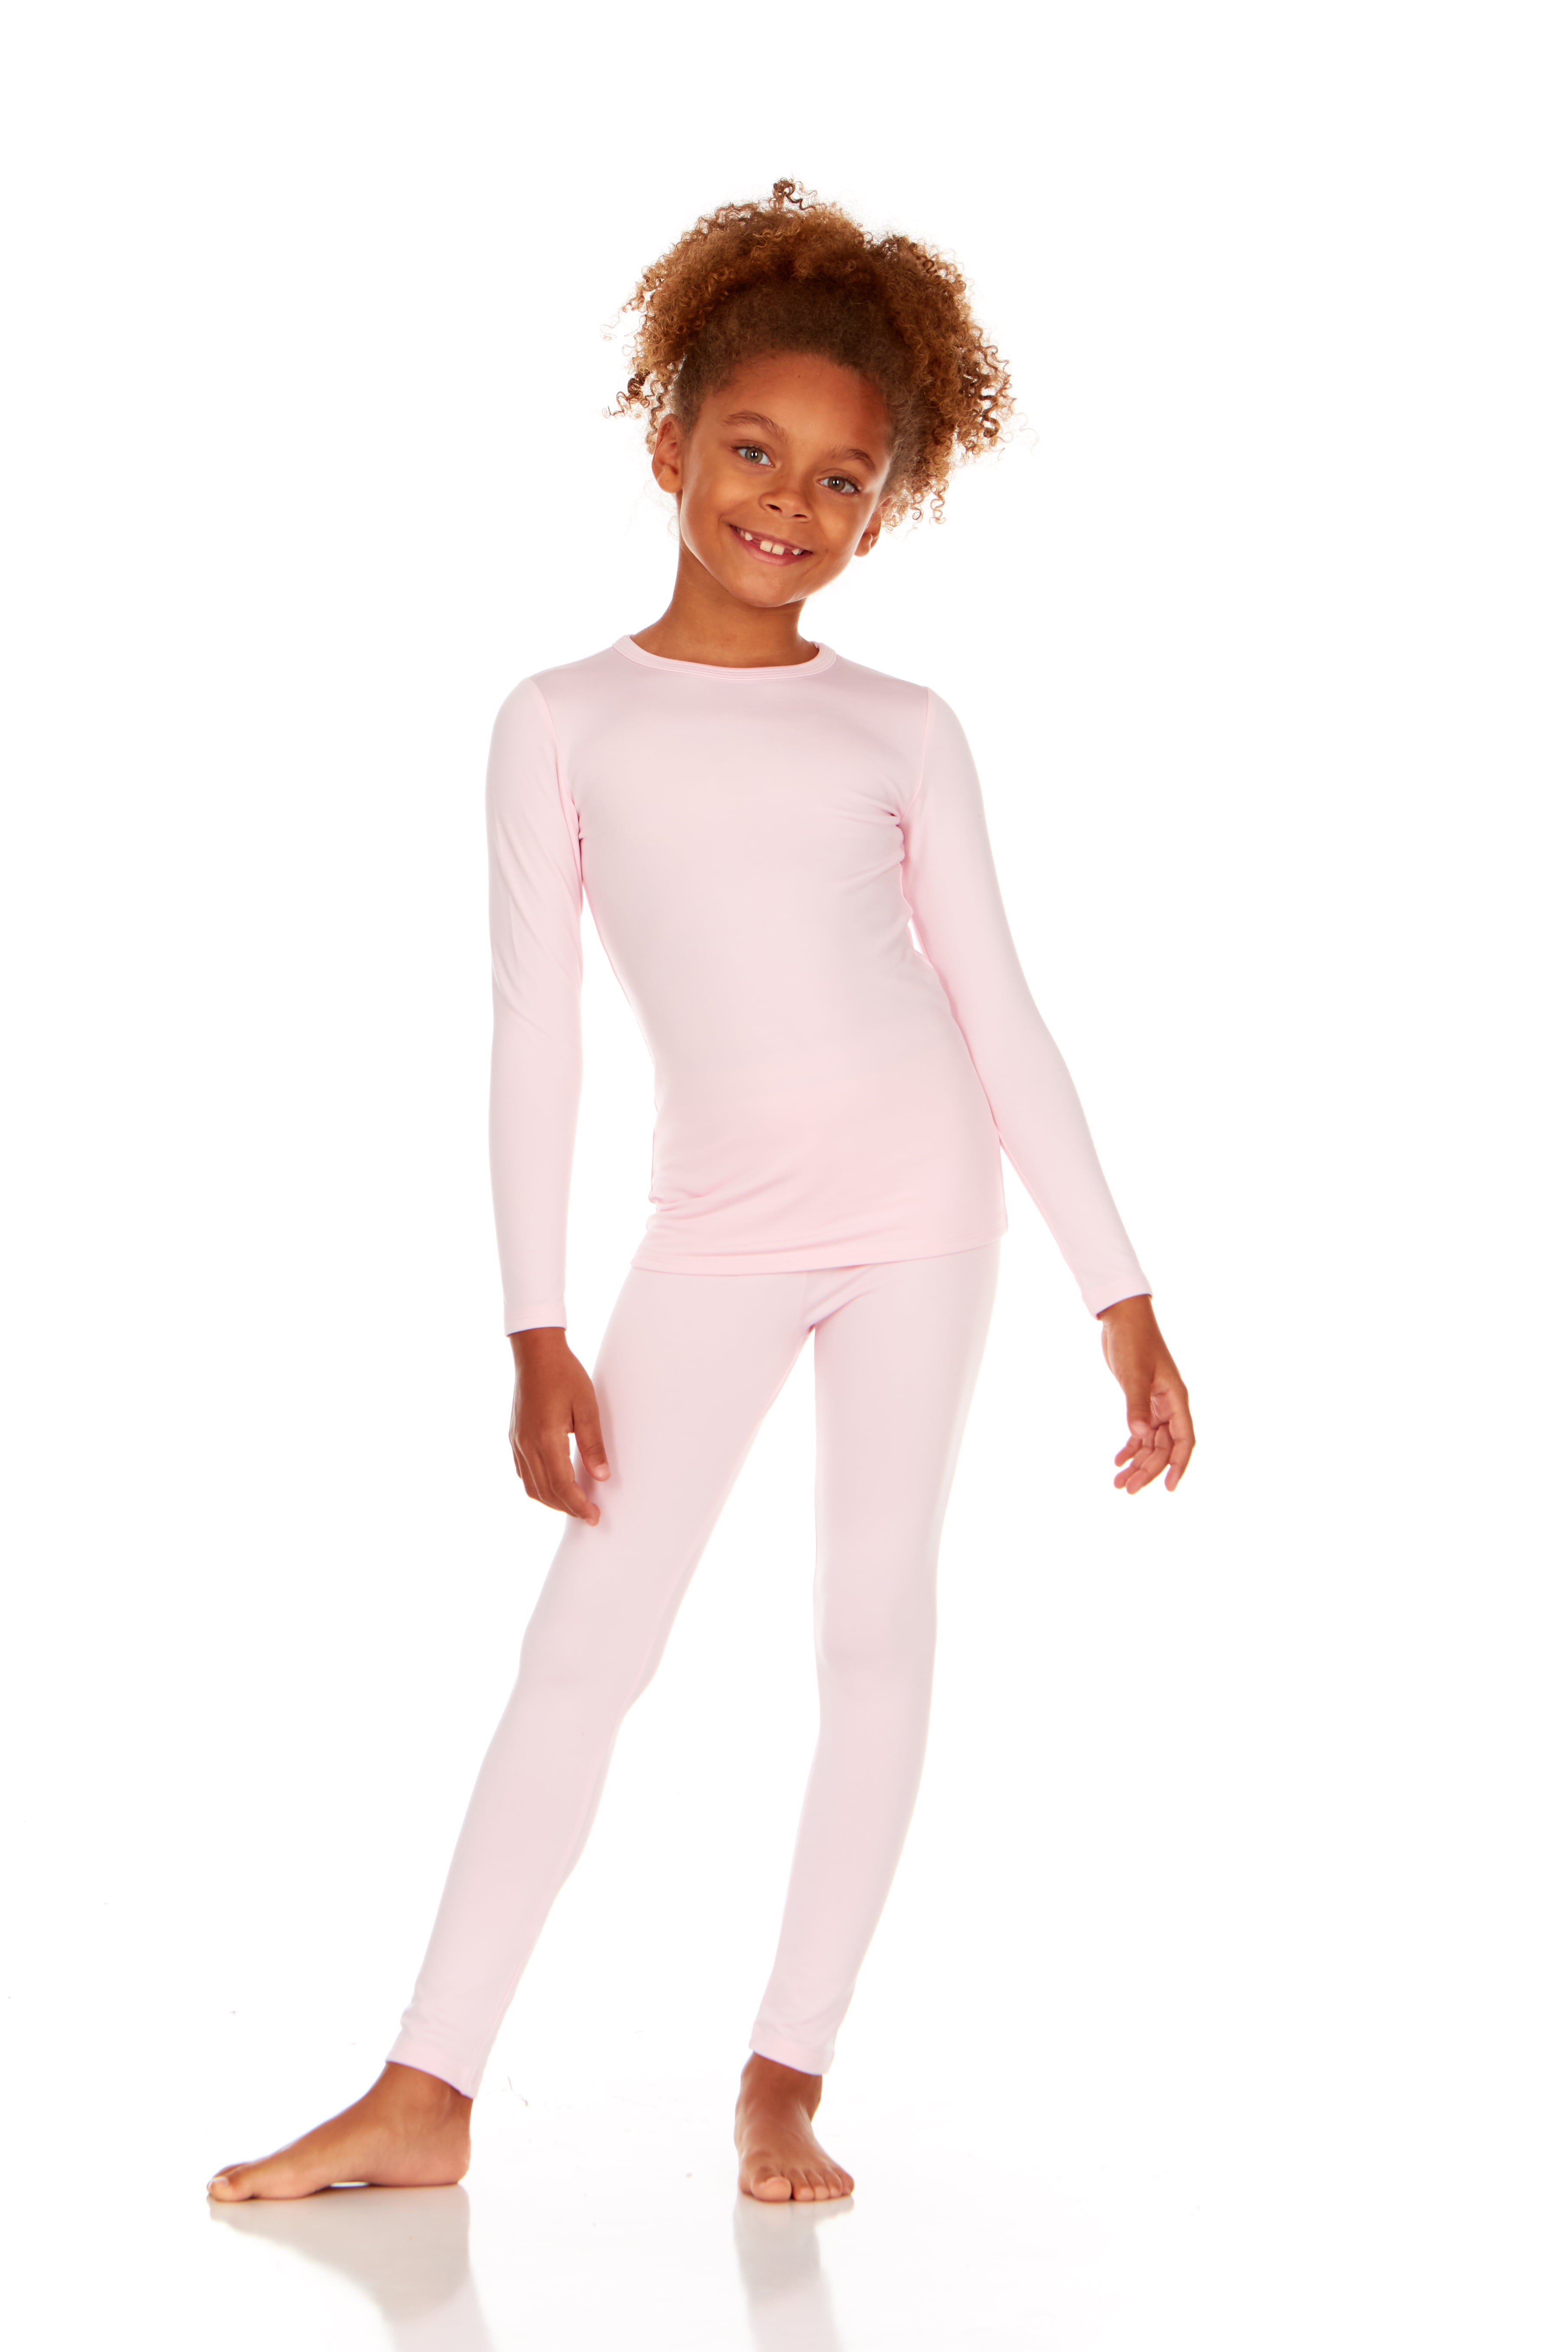 Thermajane Thermal Underwear for Girls Long John Set Kids (Baby Pink, Small)